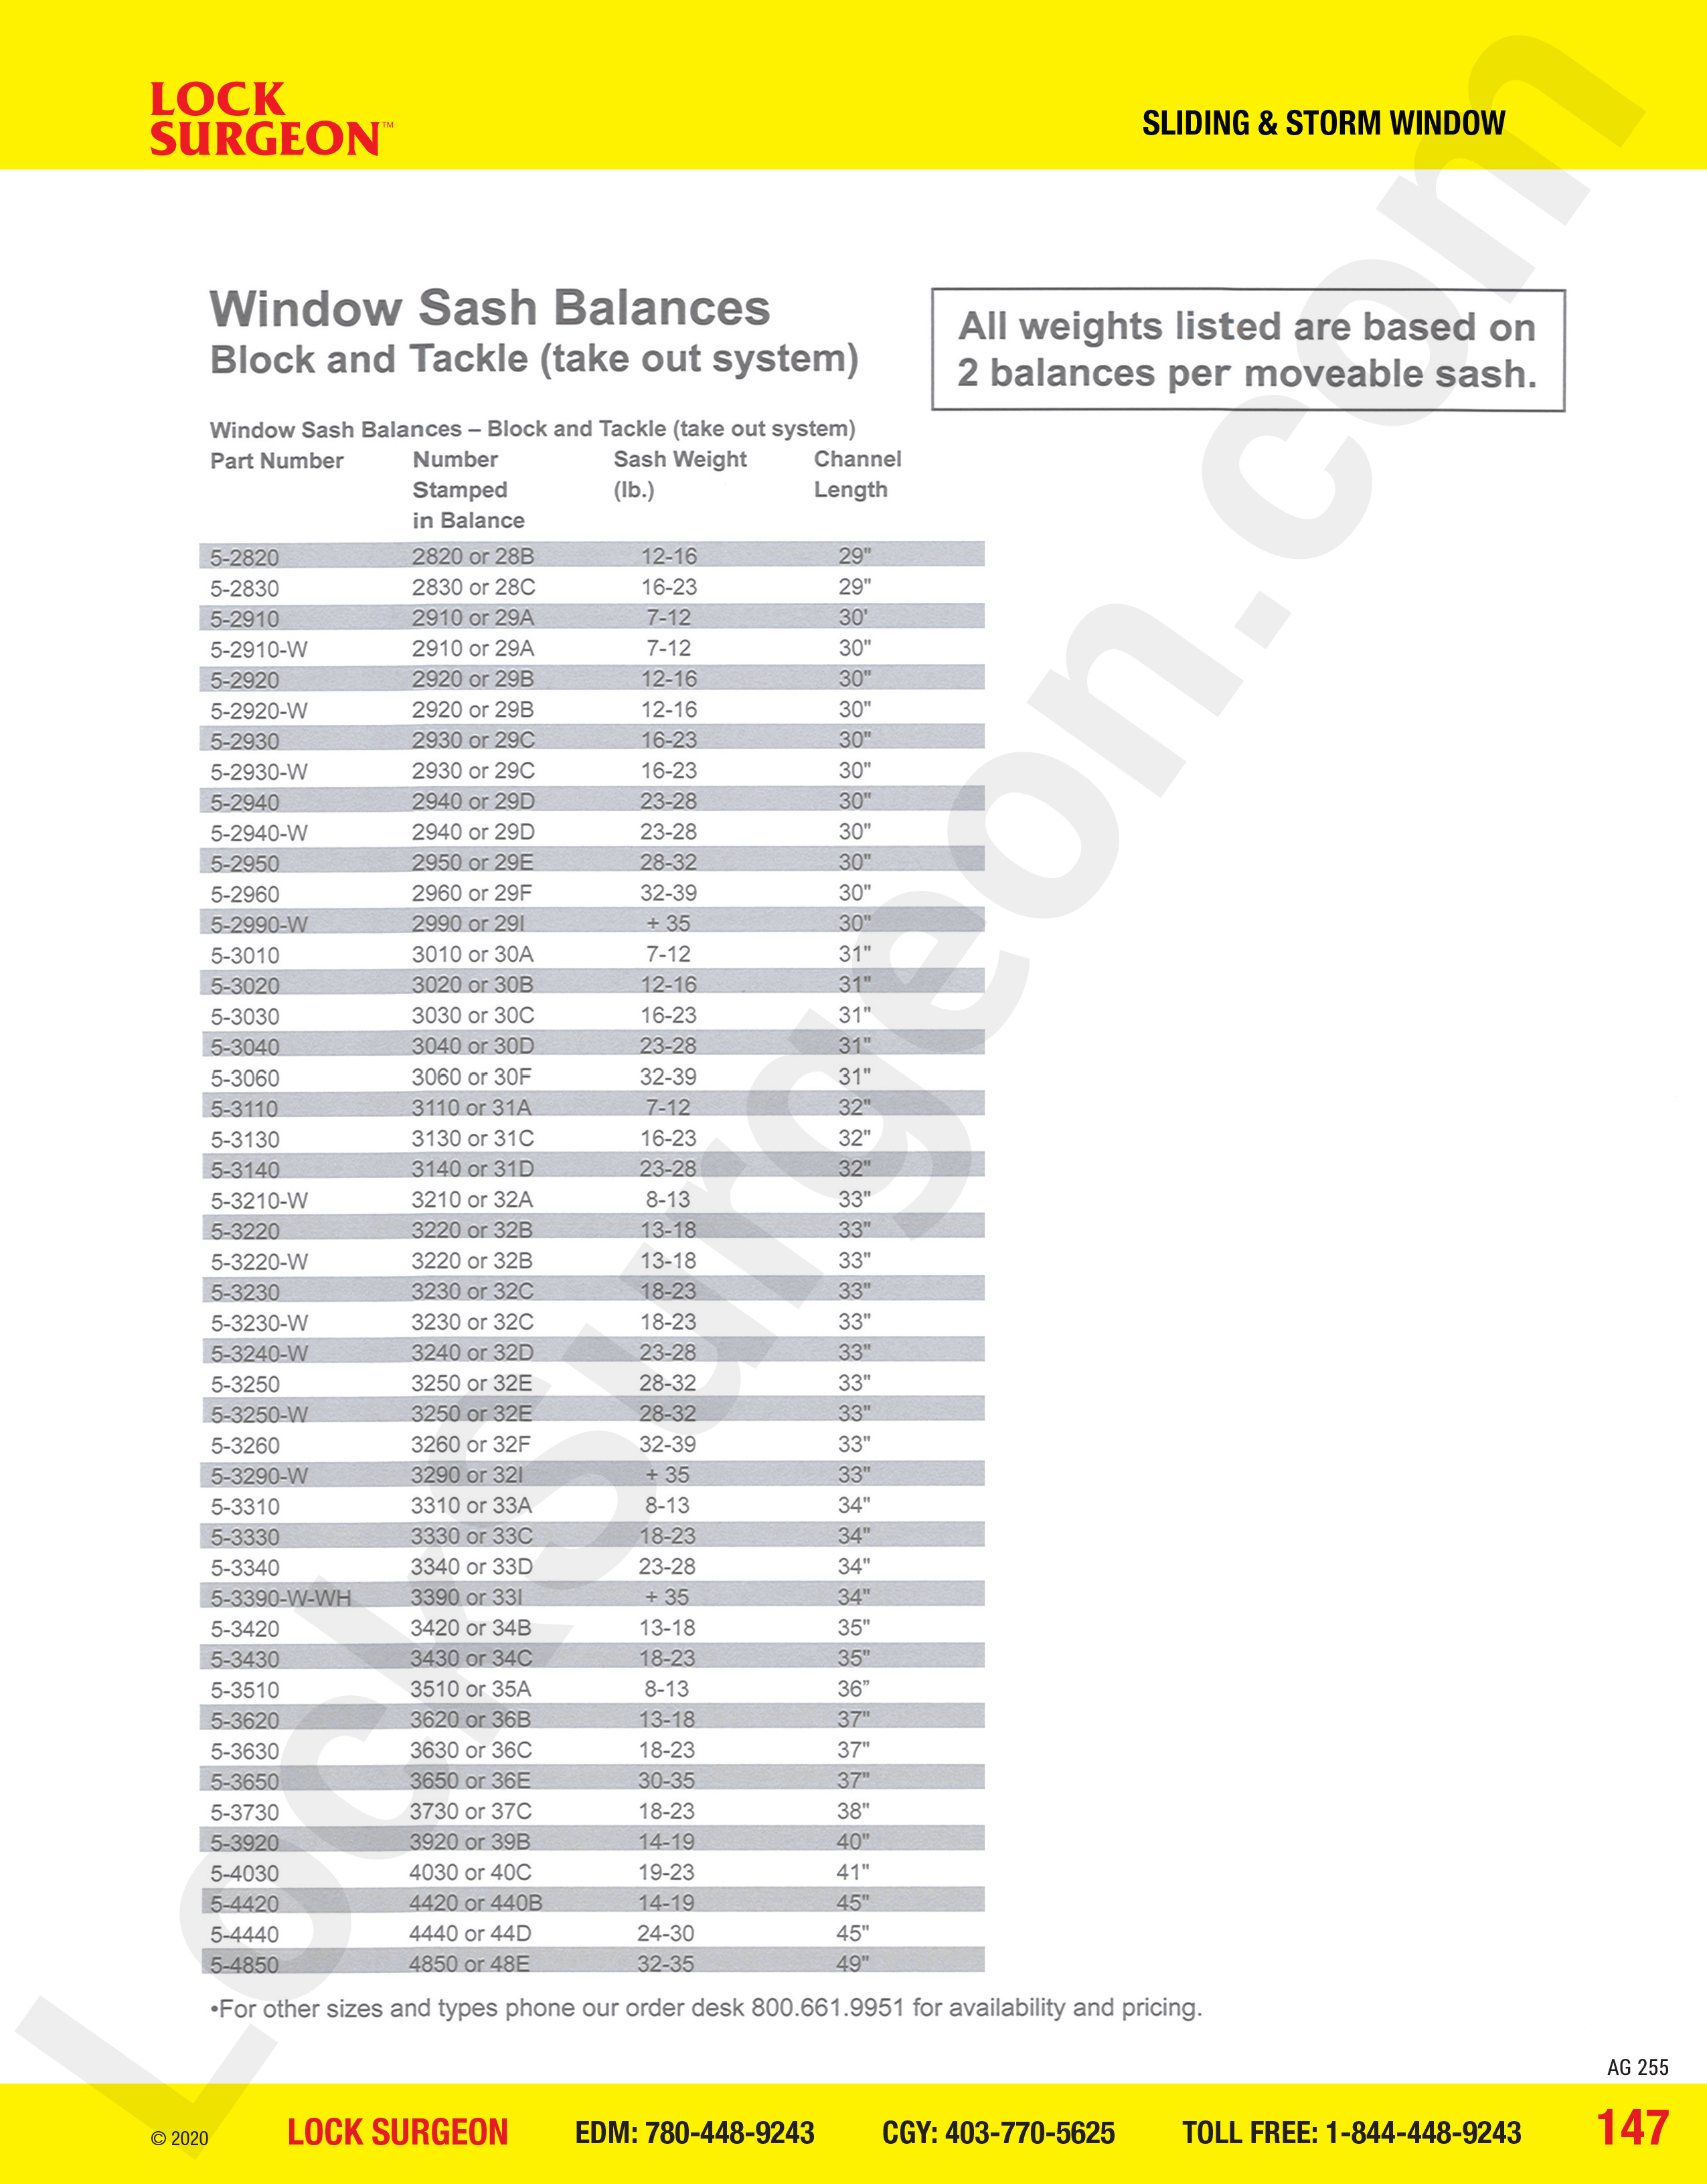 Sliding & Storm Window sash balances supplied & installed by Lock Surgeon Edmonton South Locksmiths.